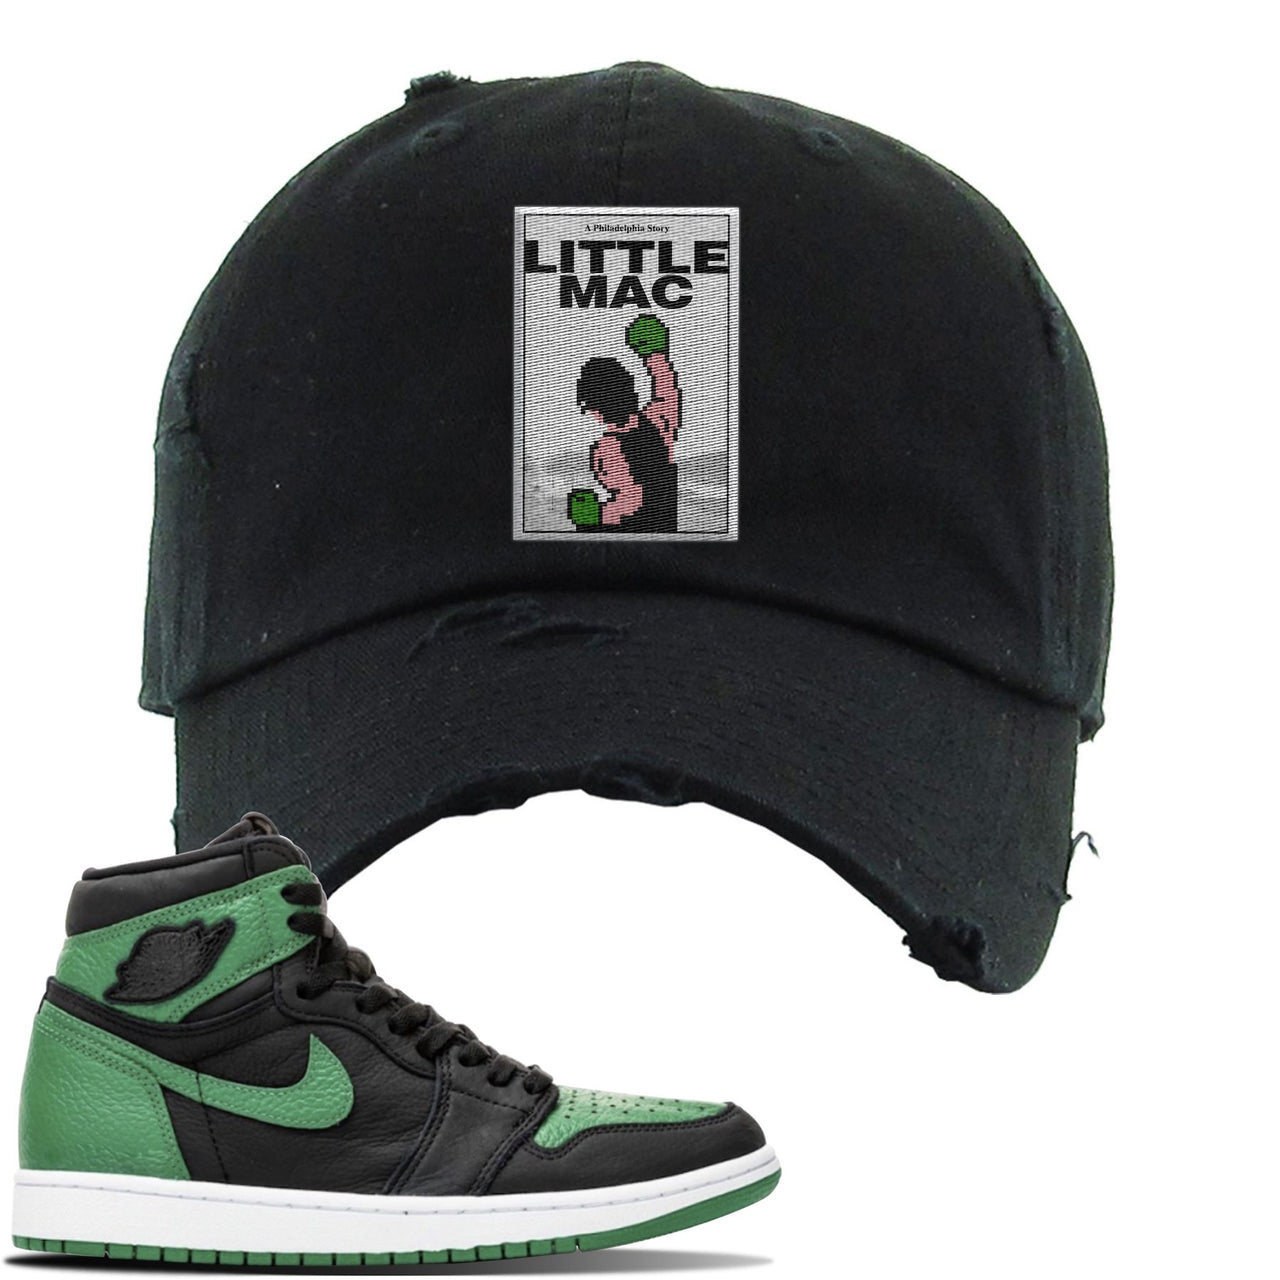 Jordan 1 Retro High OG Pine Green Gym Sneaker Black Distressed Dad Hat | Hat to match Air Jordan 1 Retro High OG Pine Green Gym Shoes | Little Mac A Philly Story